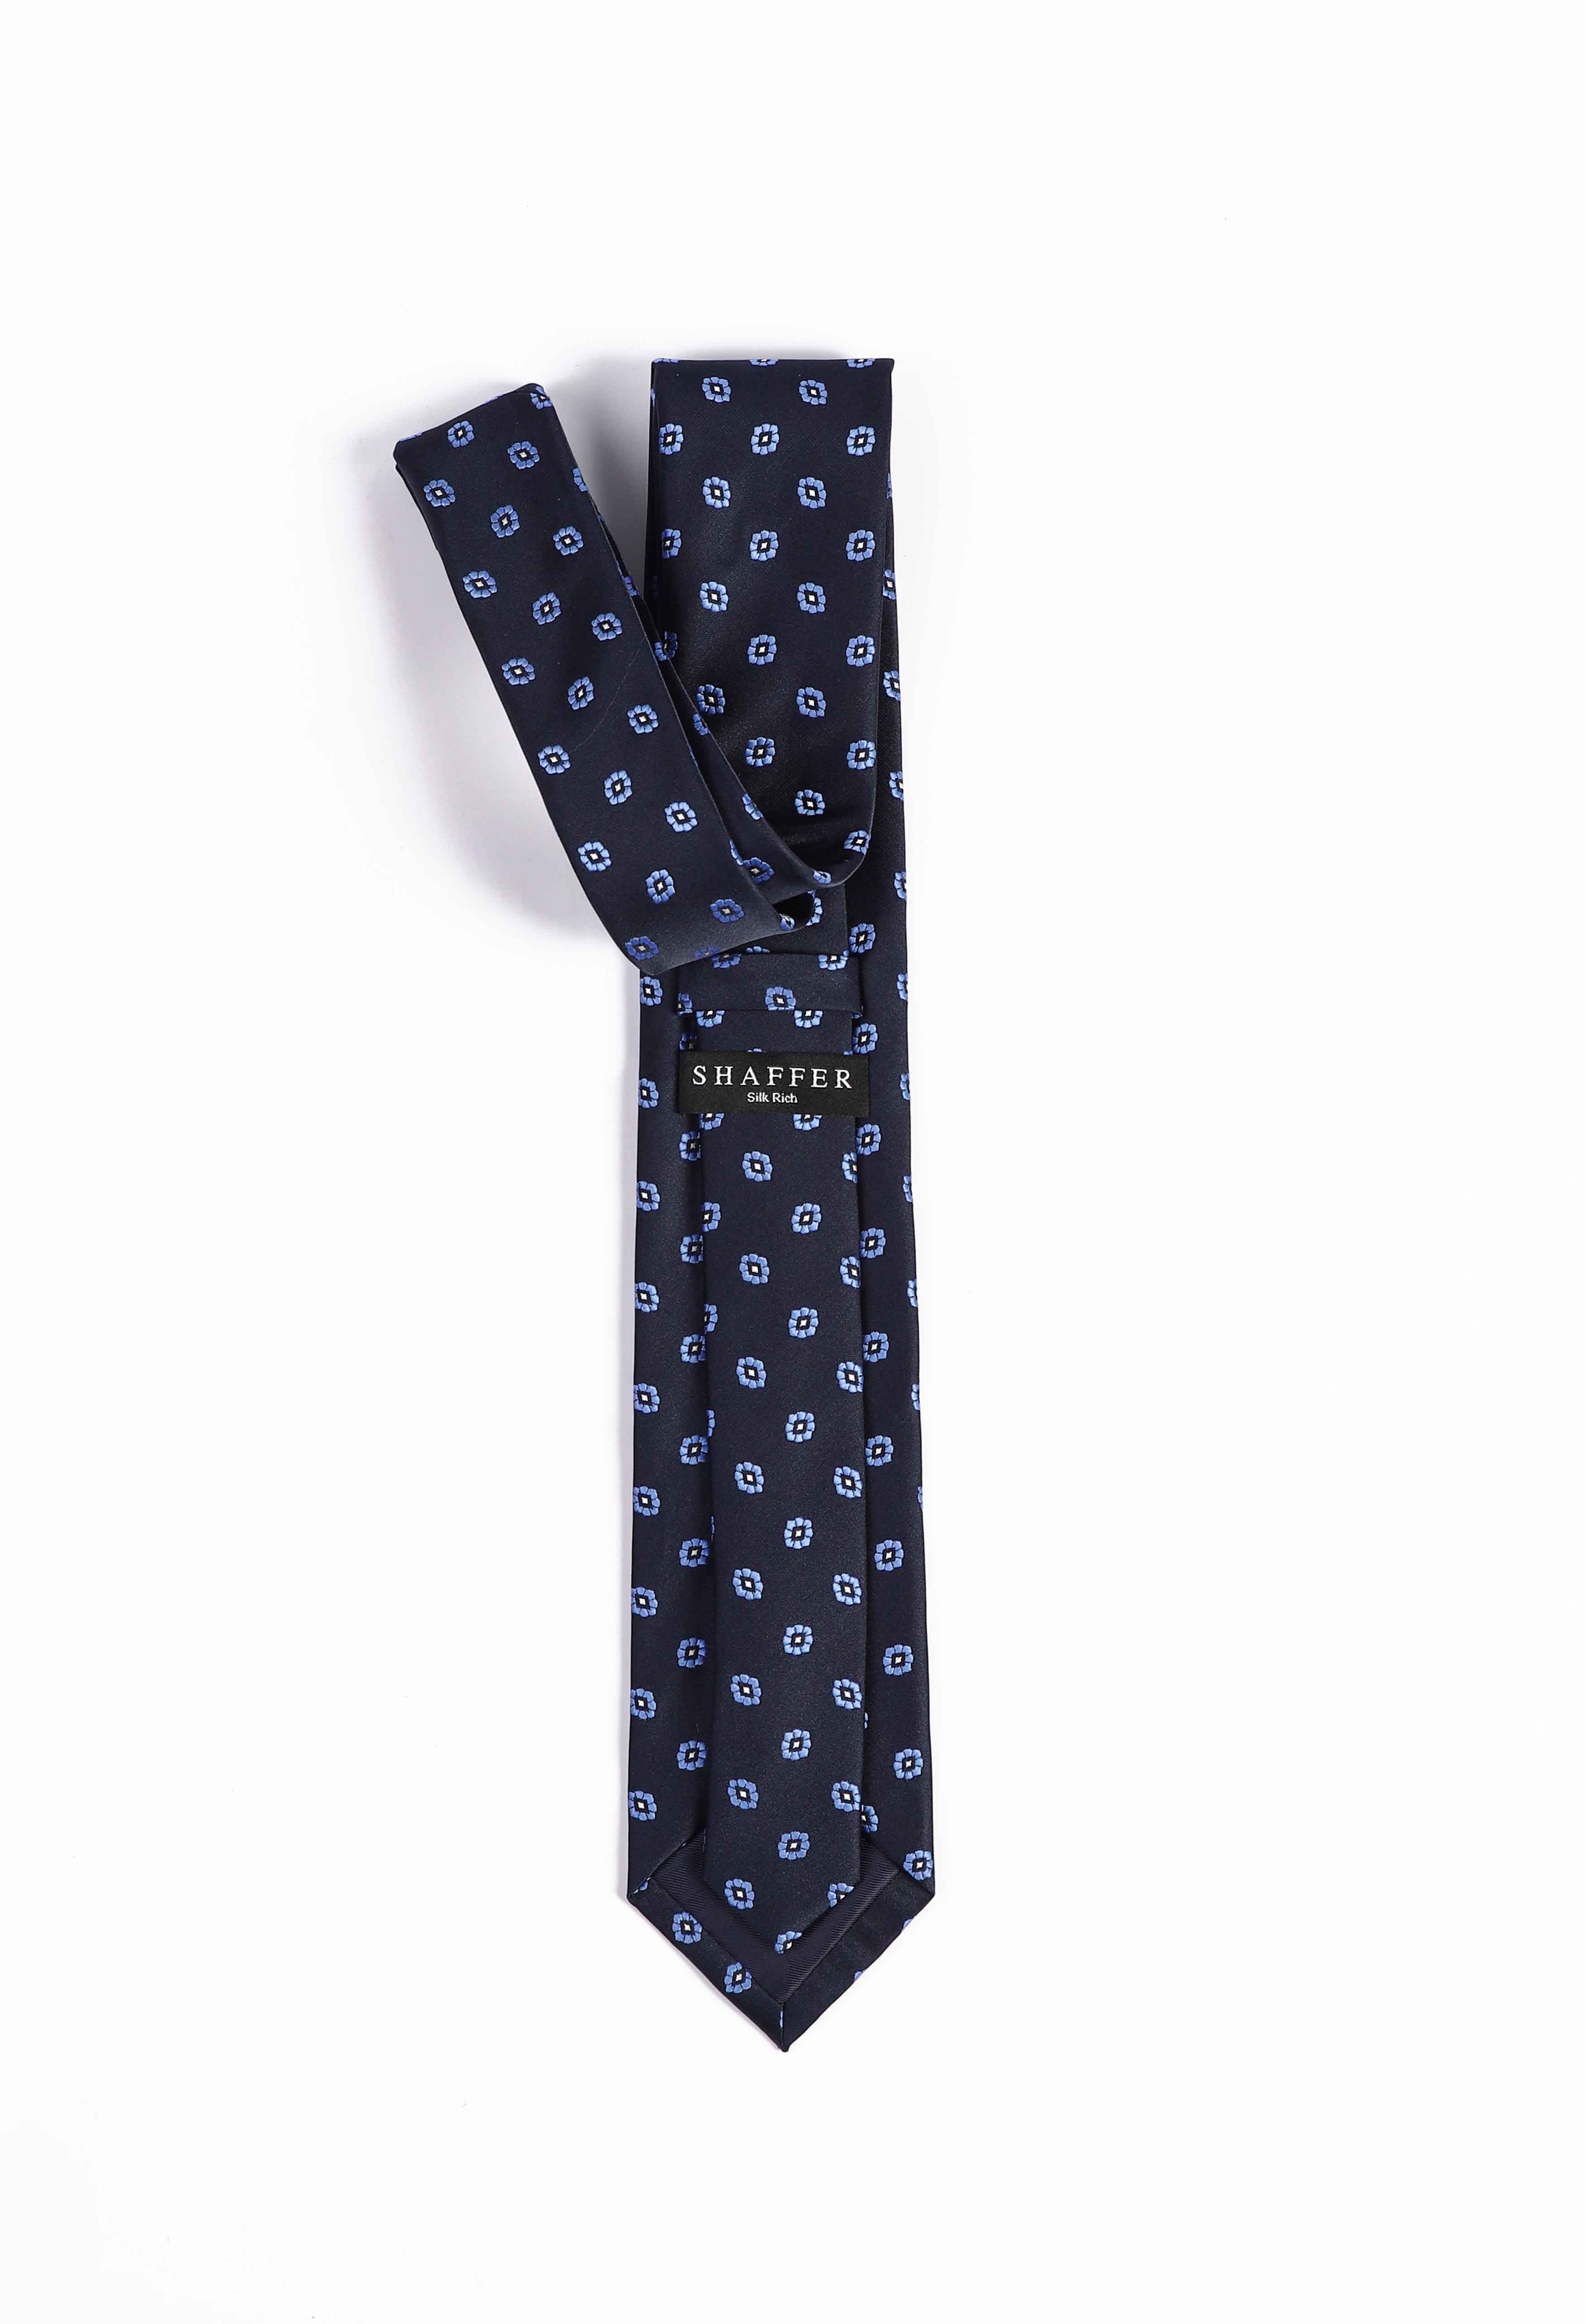 Denim Blue Floral Tie